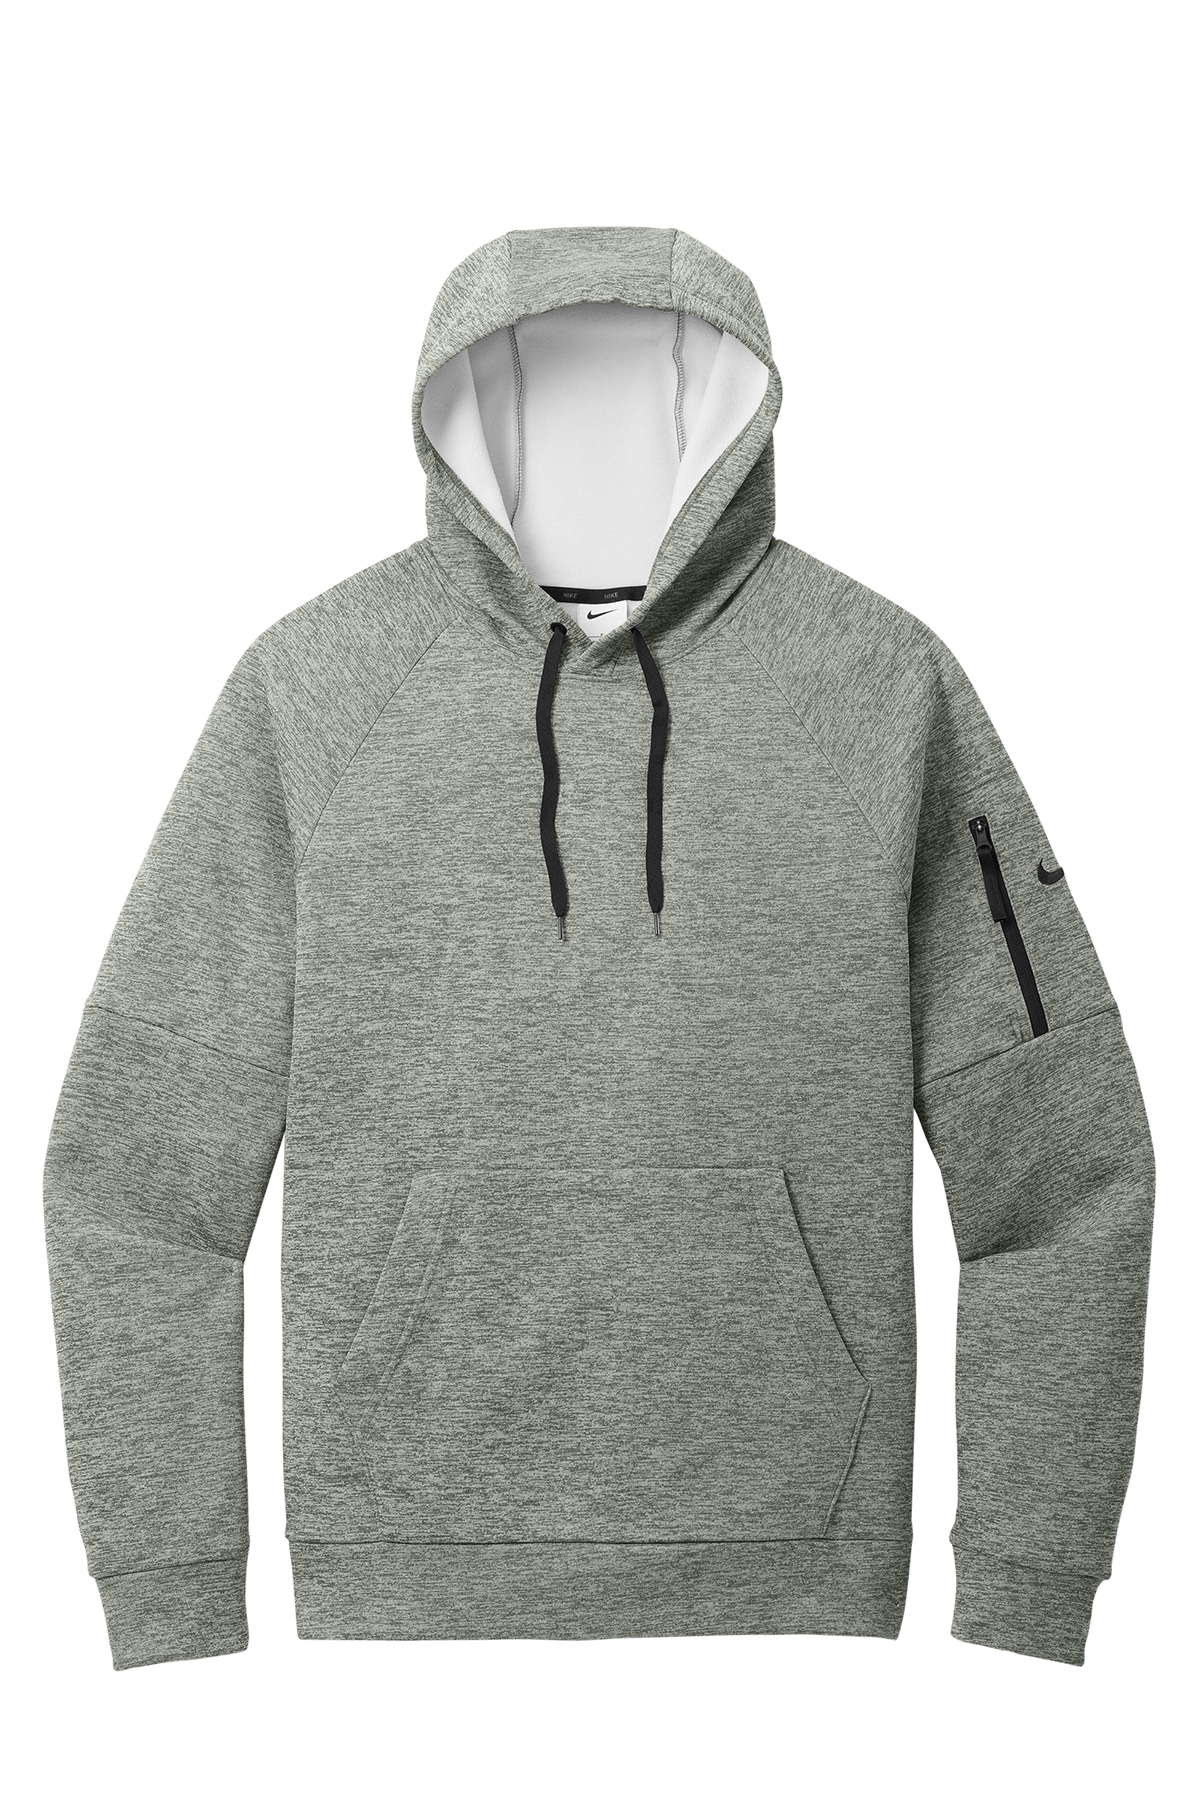 Nike Therma-FIT Pocket Pullover Fleece Hoodie | Product | SanMar